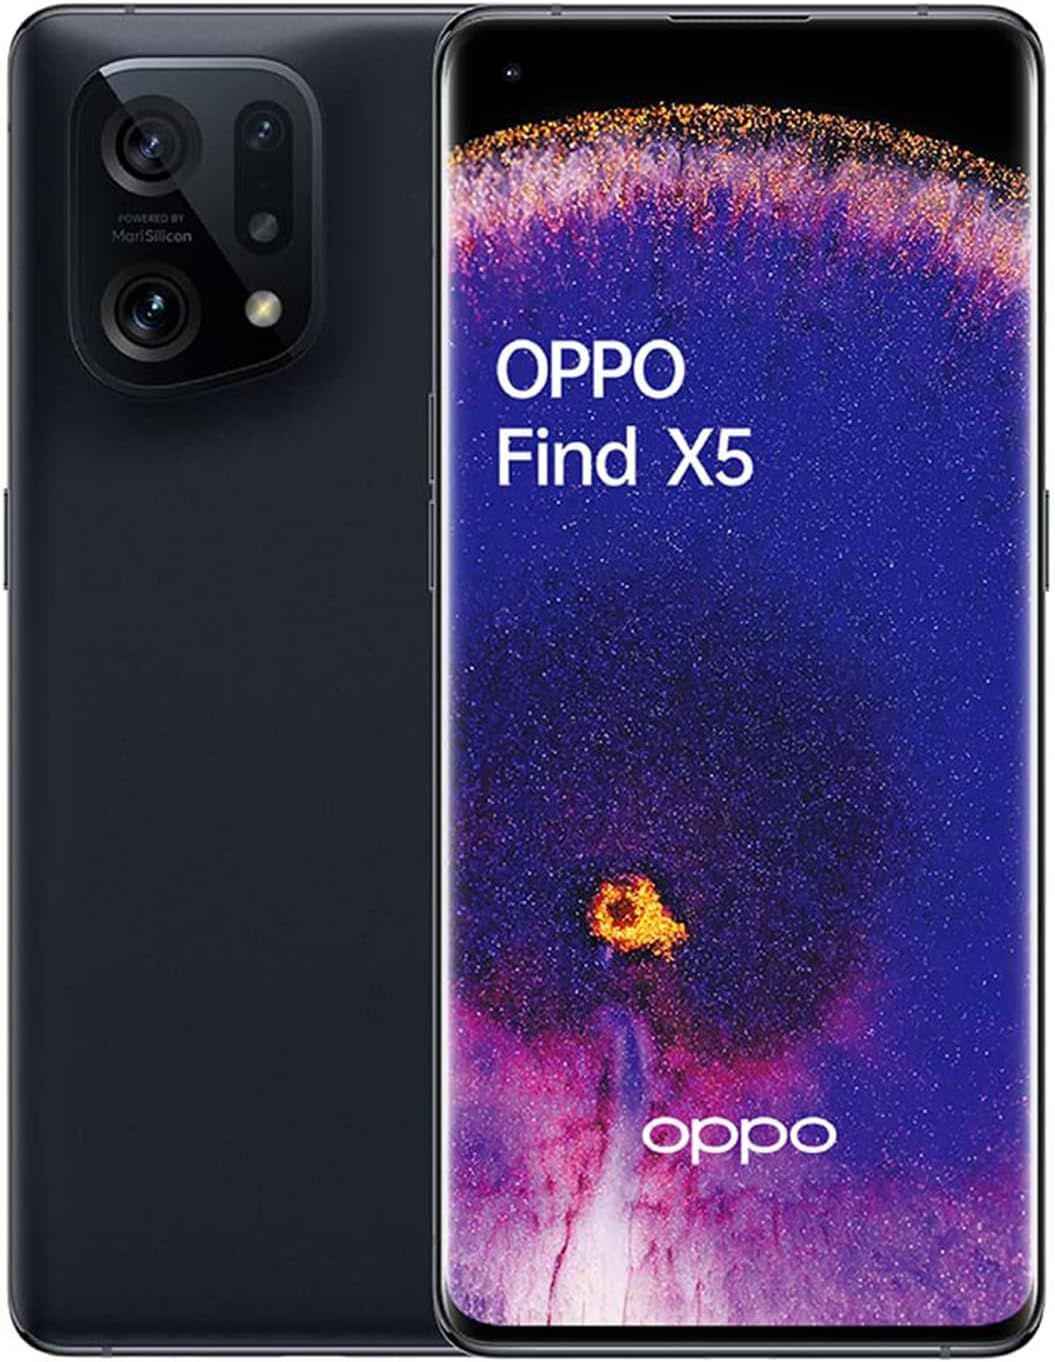 OPPO Find X5 Dual-SIM 256GB ROM + 8GB RAM Smartphone Review